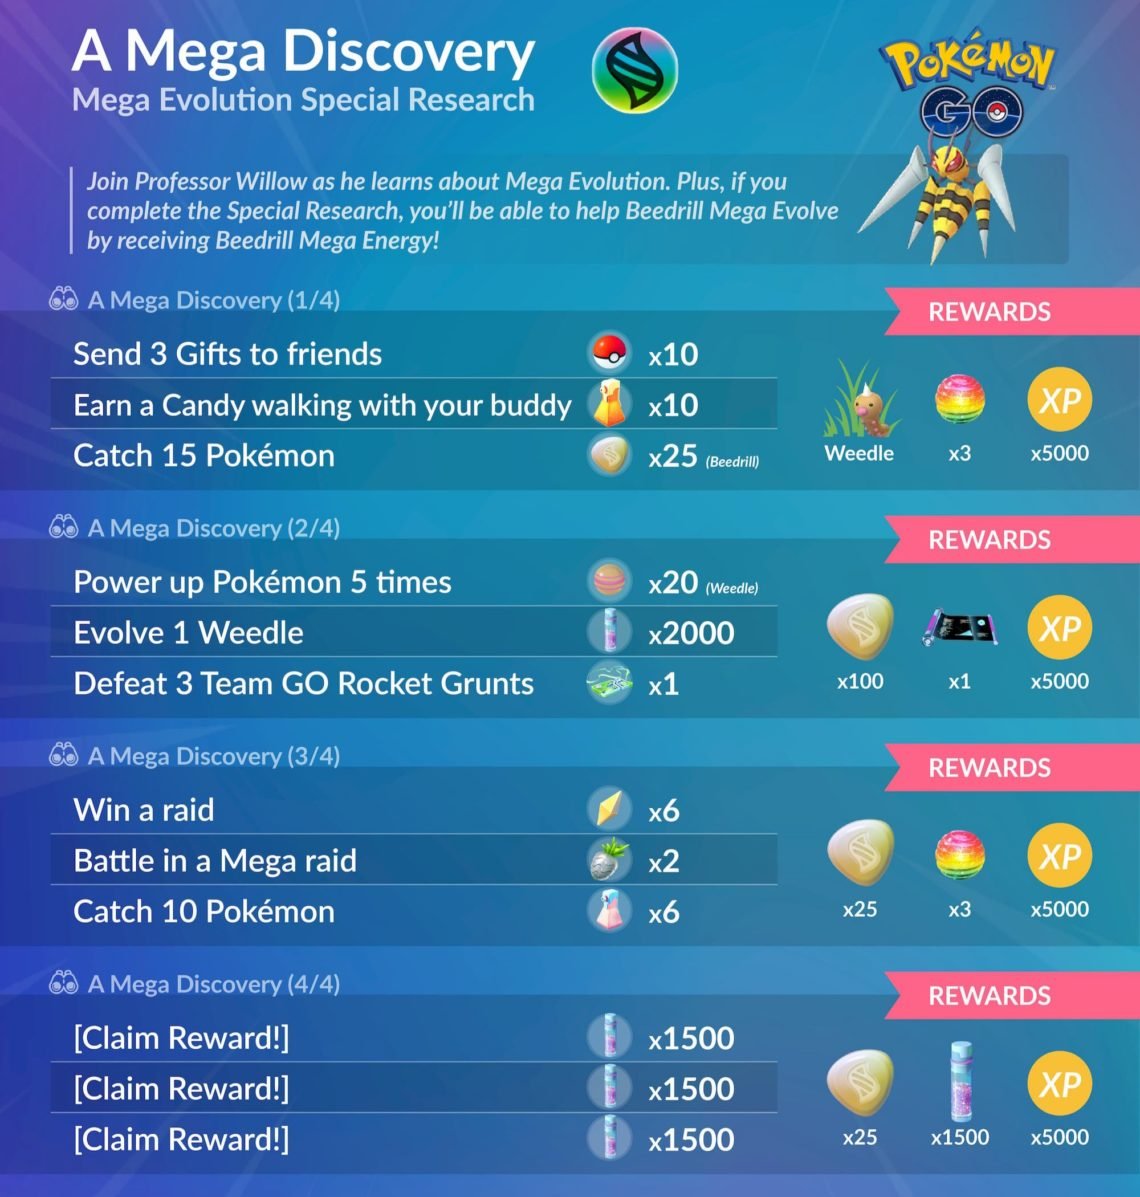 all research task rewards pokemon go